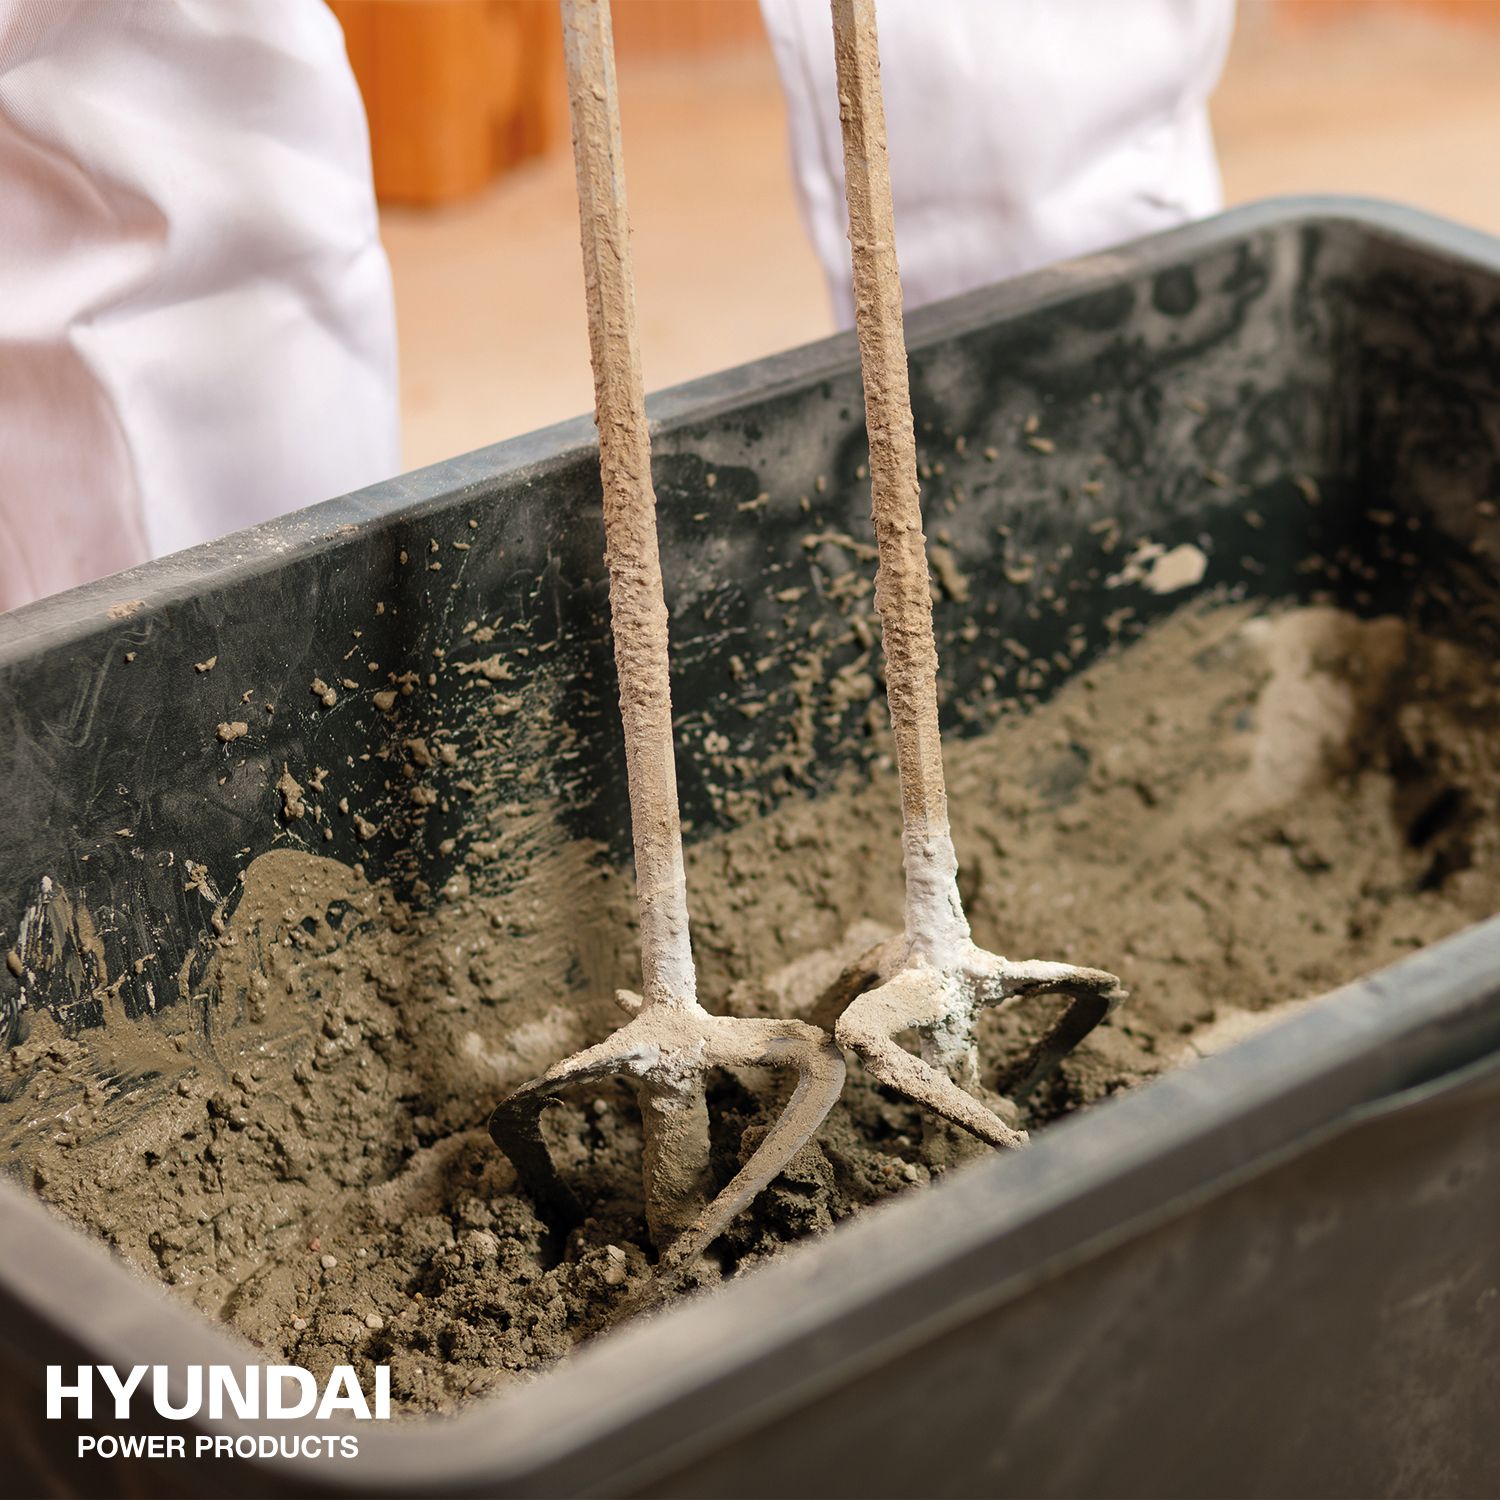 Hyundai cement/verf mixer 1800 W